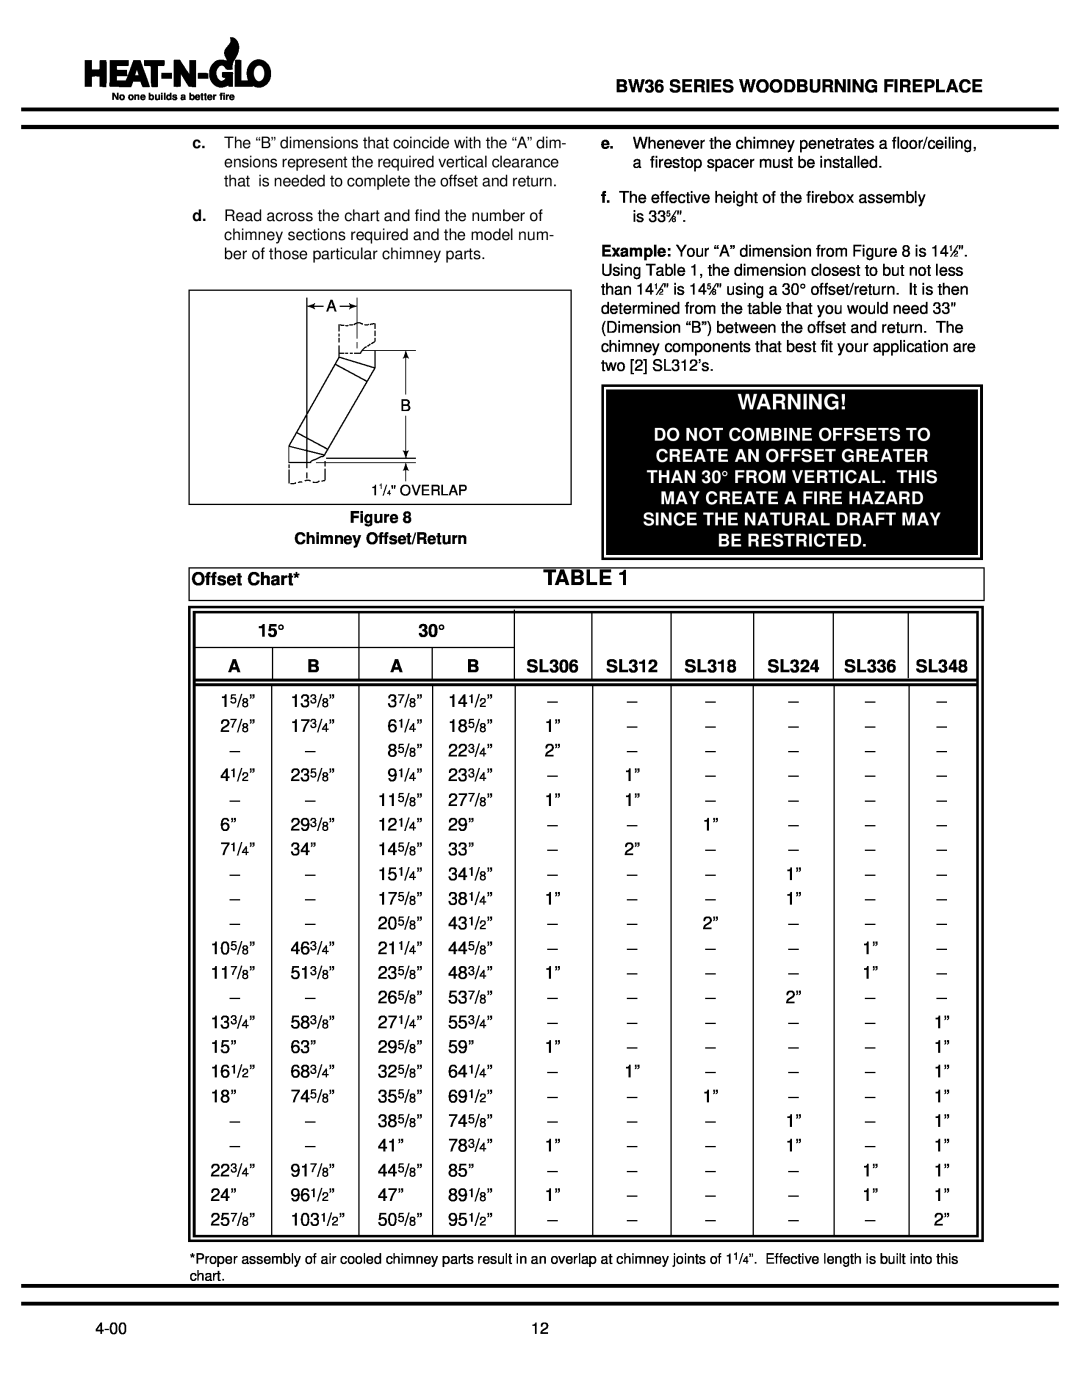 Heat & Glo LifeStyle Offset Chart, SL306, SL312, SL318, SL324, SL336, SL348, BW36 SERIES WOODBURNING FIREPLACE 